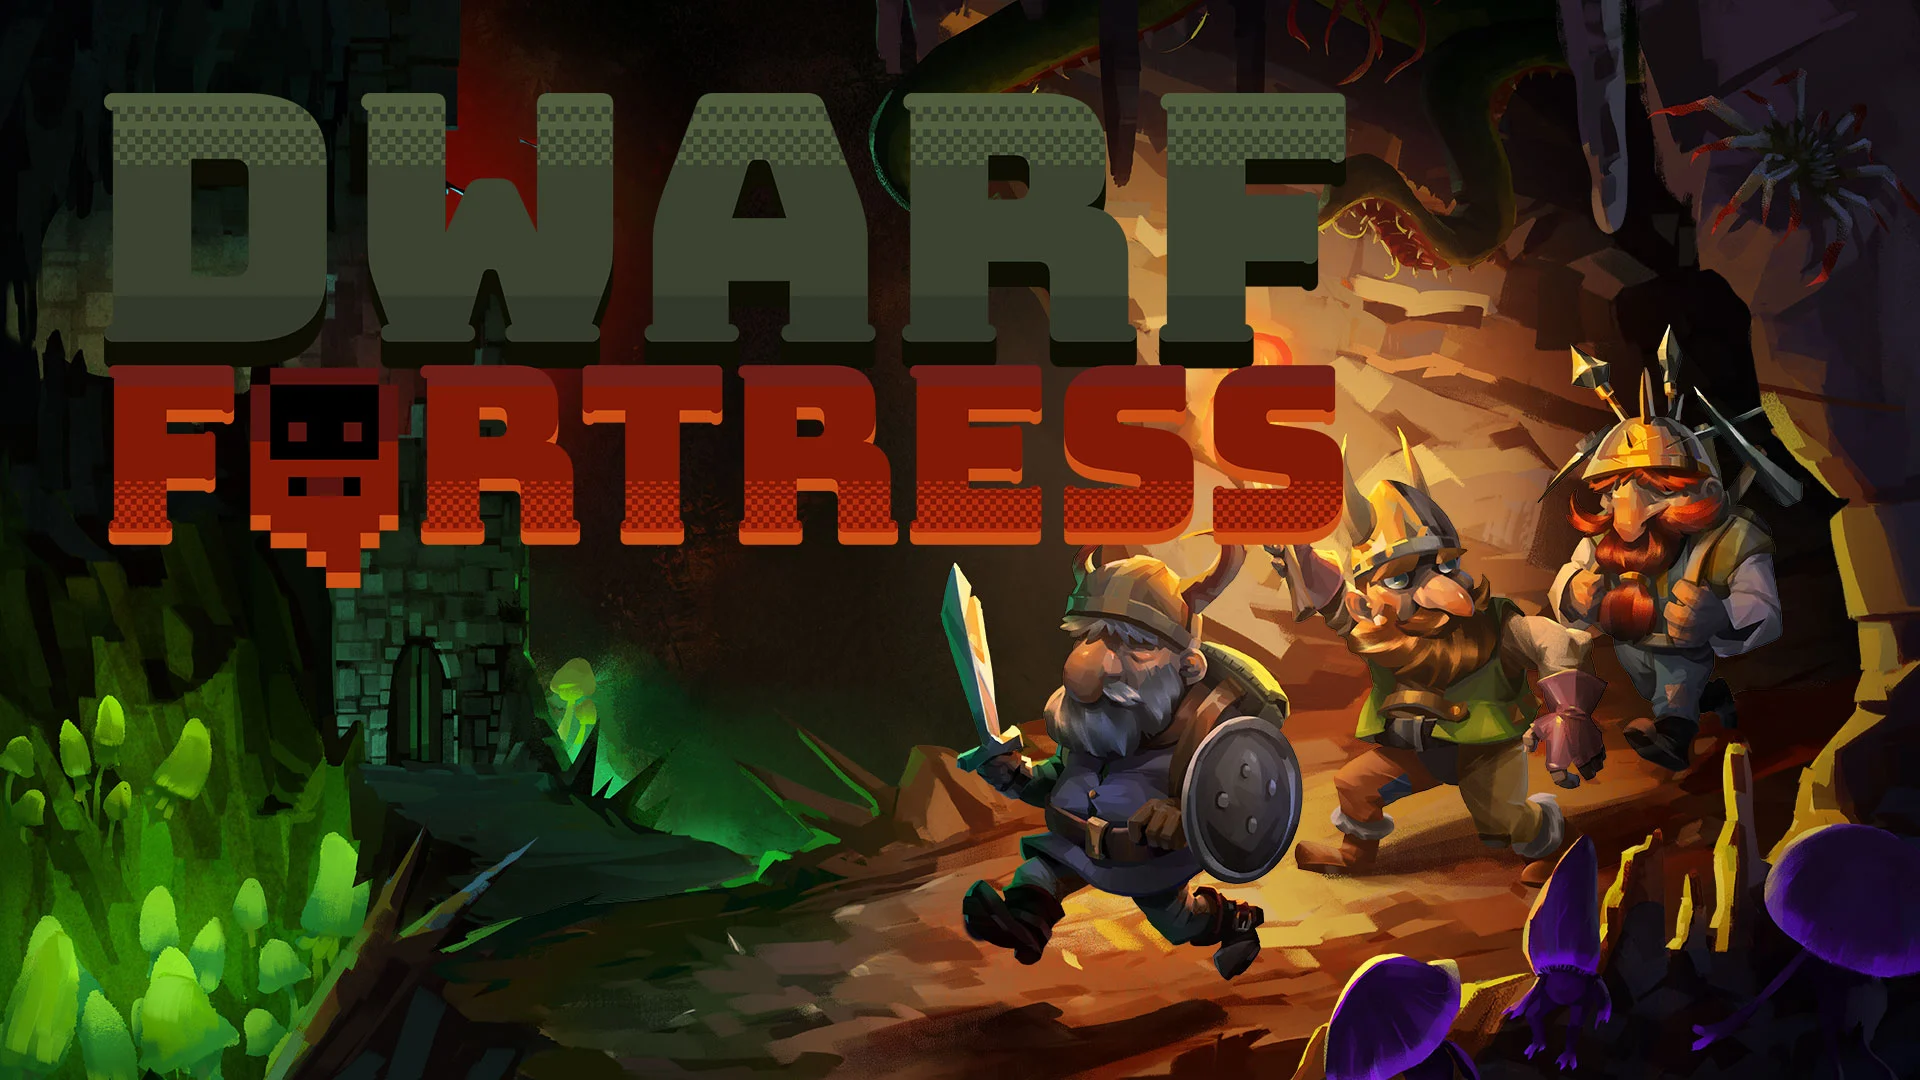 Dwarf Fortress’ 7 Million in Sales Highlights a True Hero’s Journey